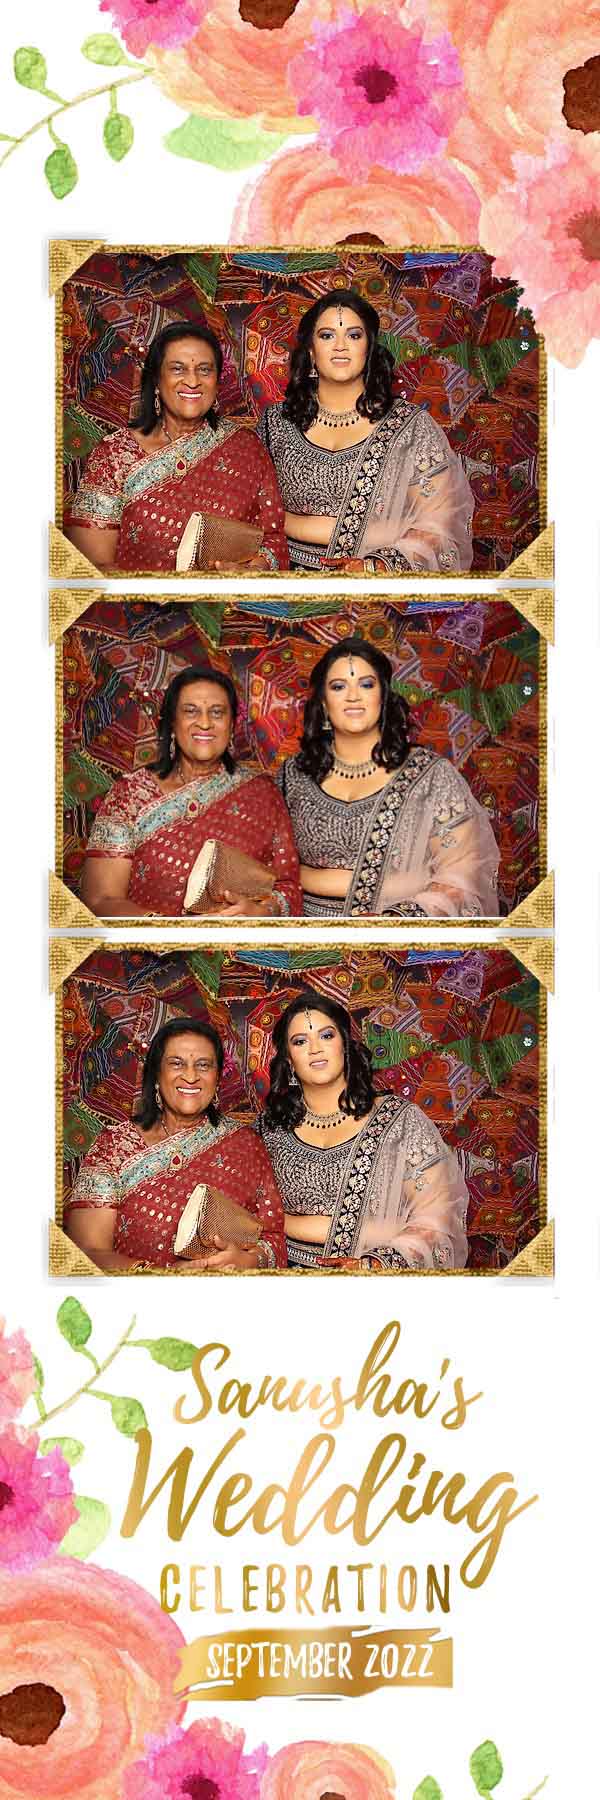 Indian Wedding and Nelengu Celebration Photobooths in Durban and KZN - Professionally printed Photos for Indian Celebrations